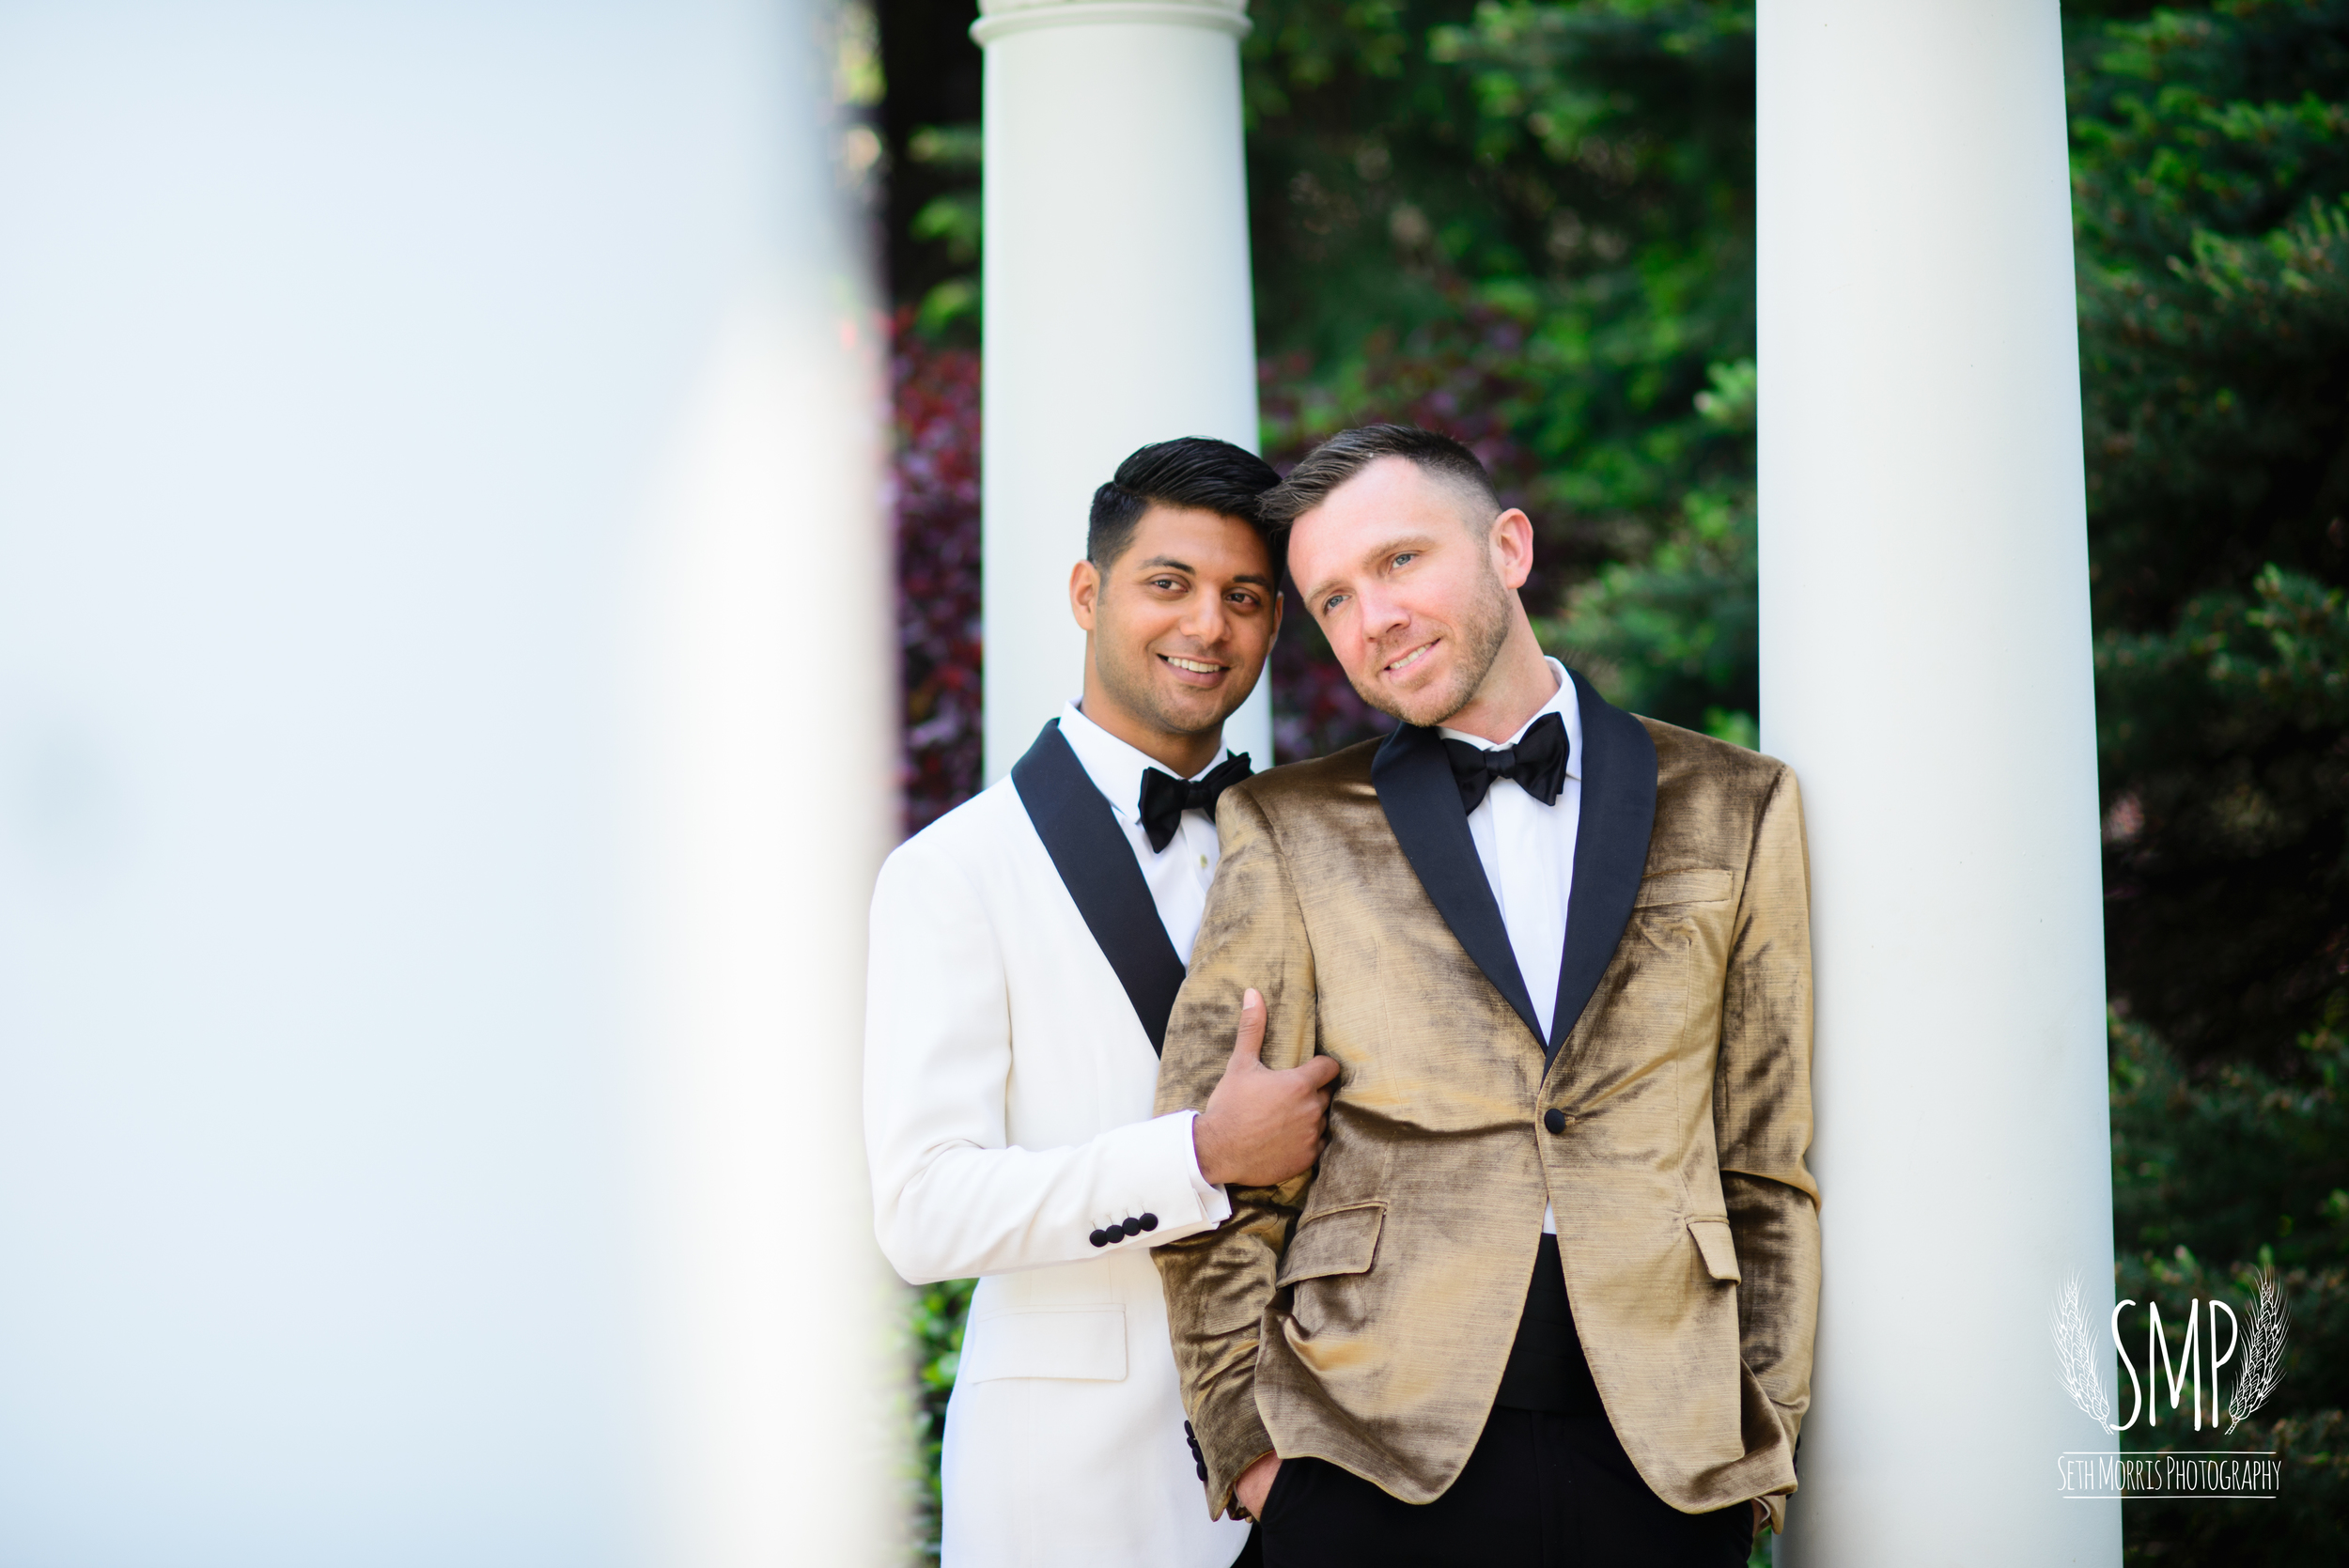 same-sex-wedding-photographer-chicago-illinois-26.jpg